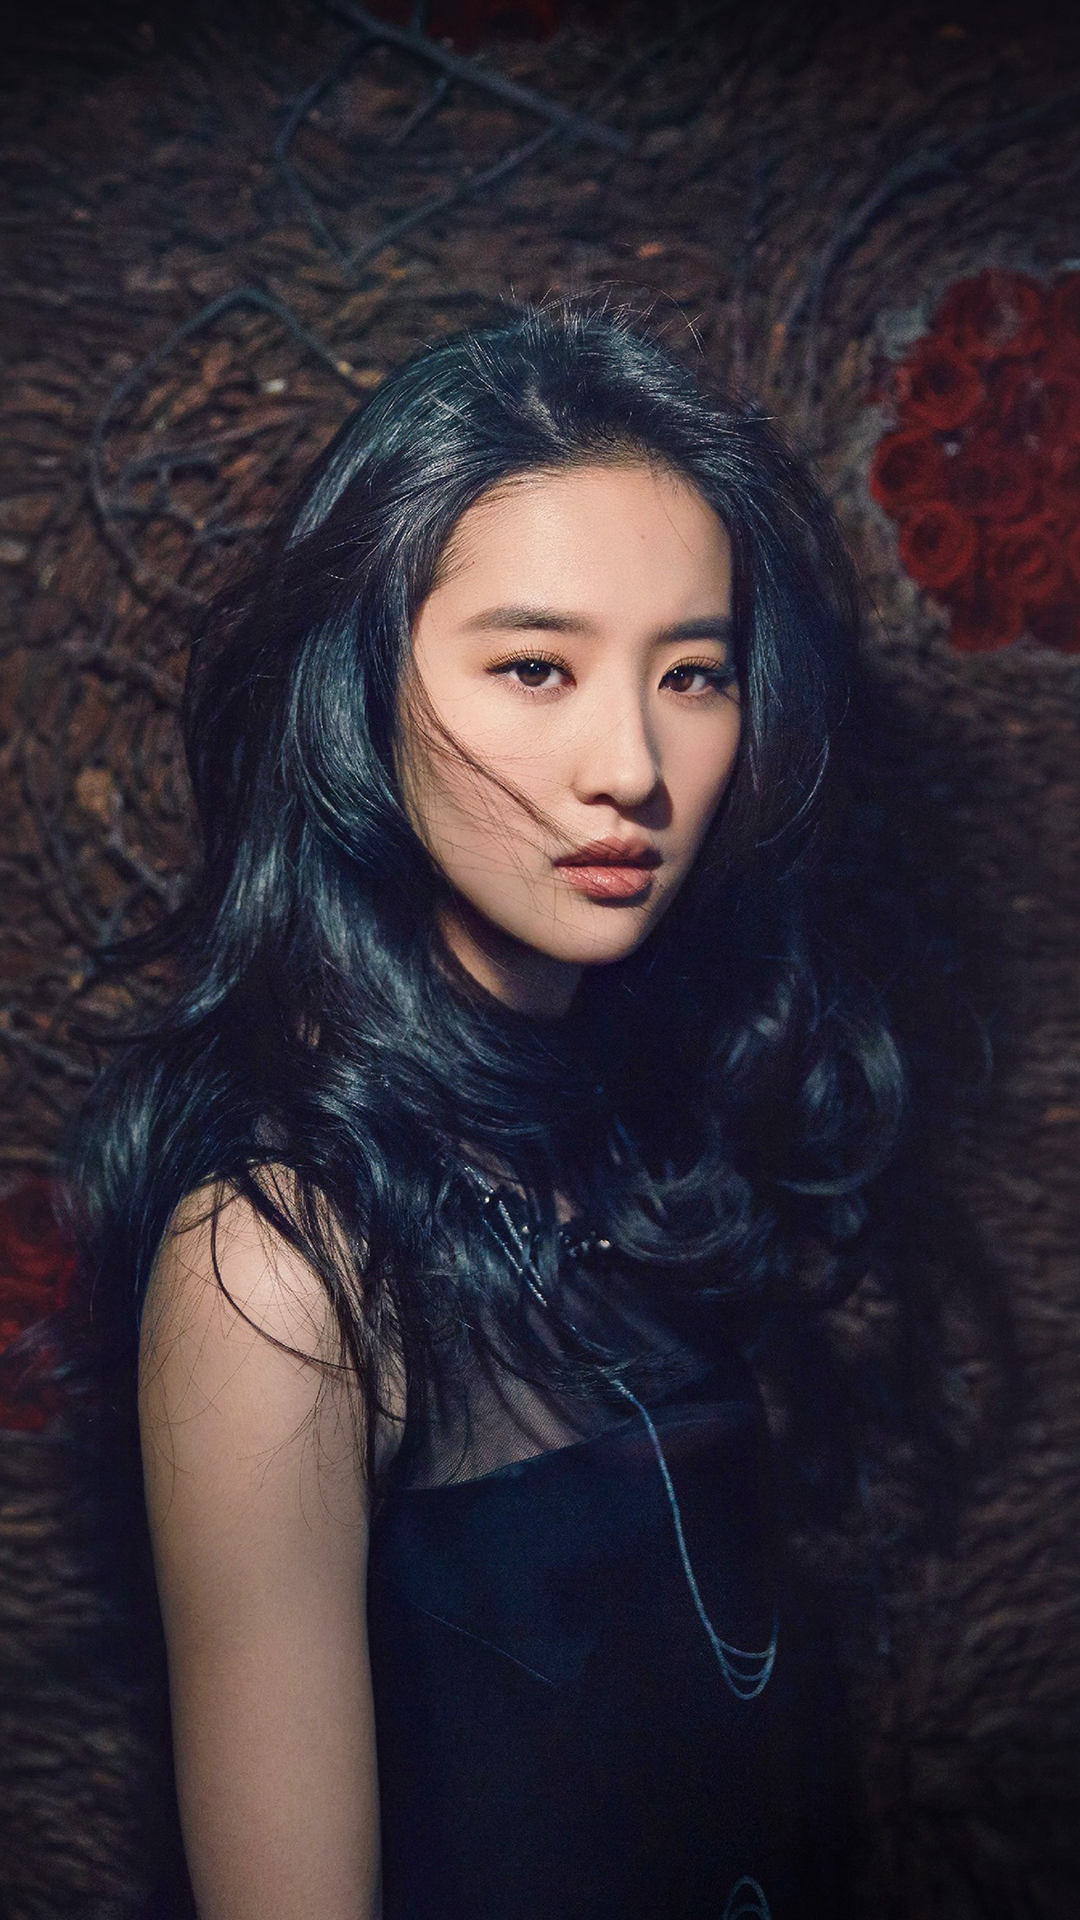 Girl Liu Yifei China Film Actress Model Singer Dark iPhone 8